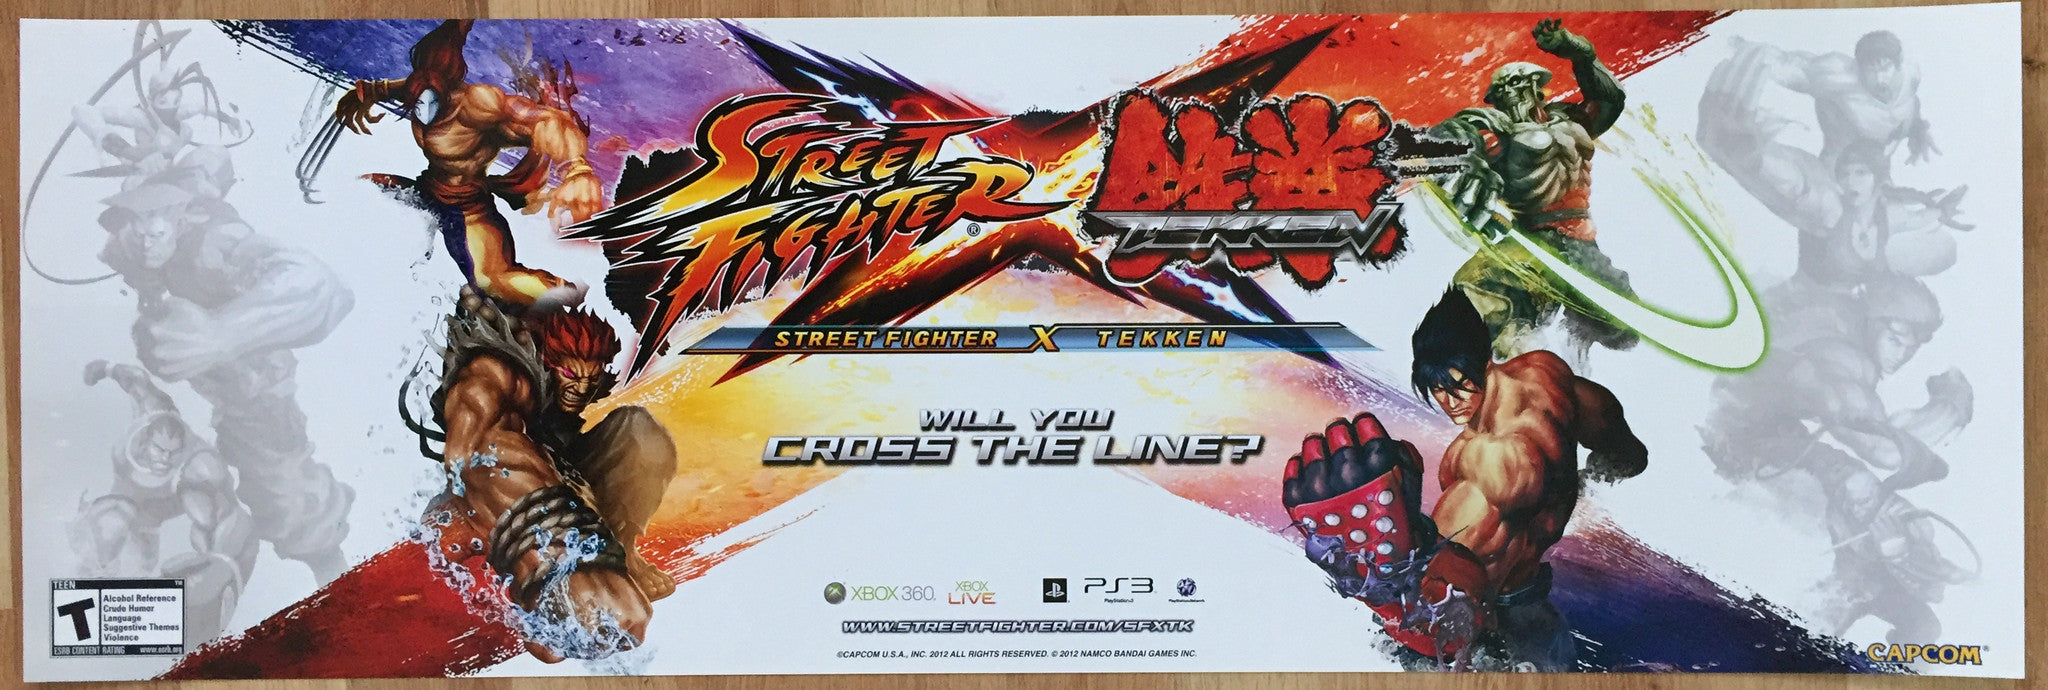 Street Fighter X Tekken Promotional Poster